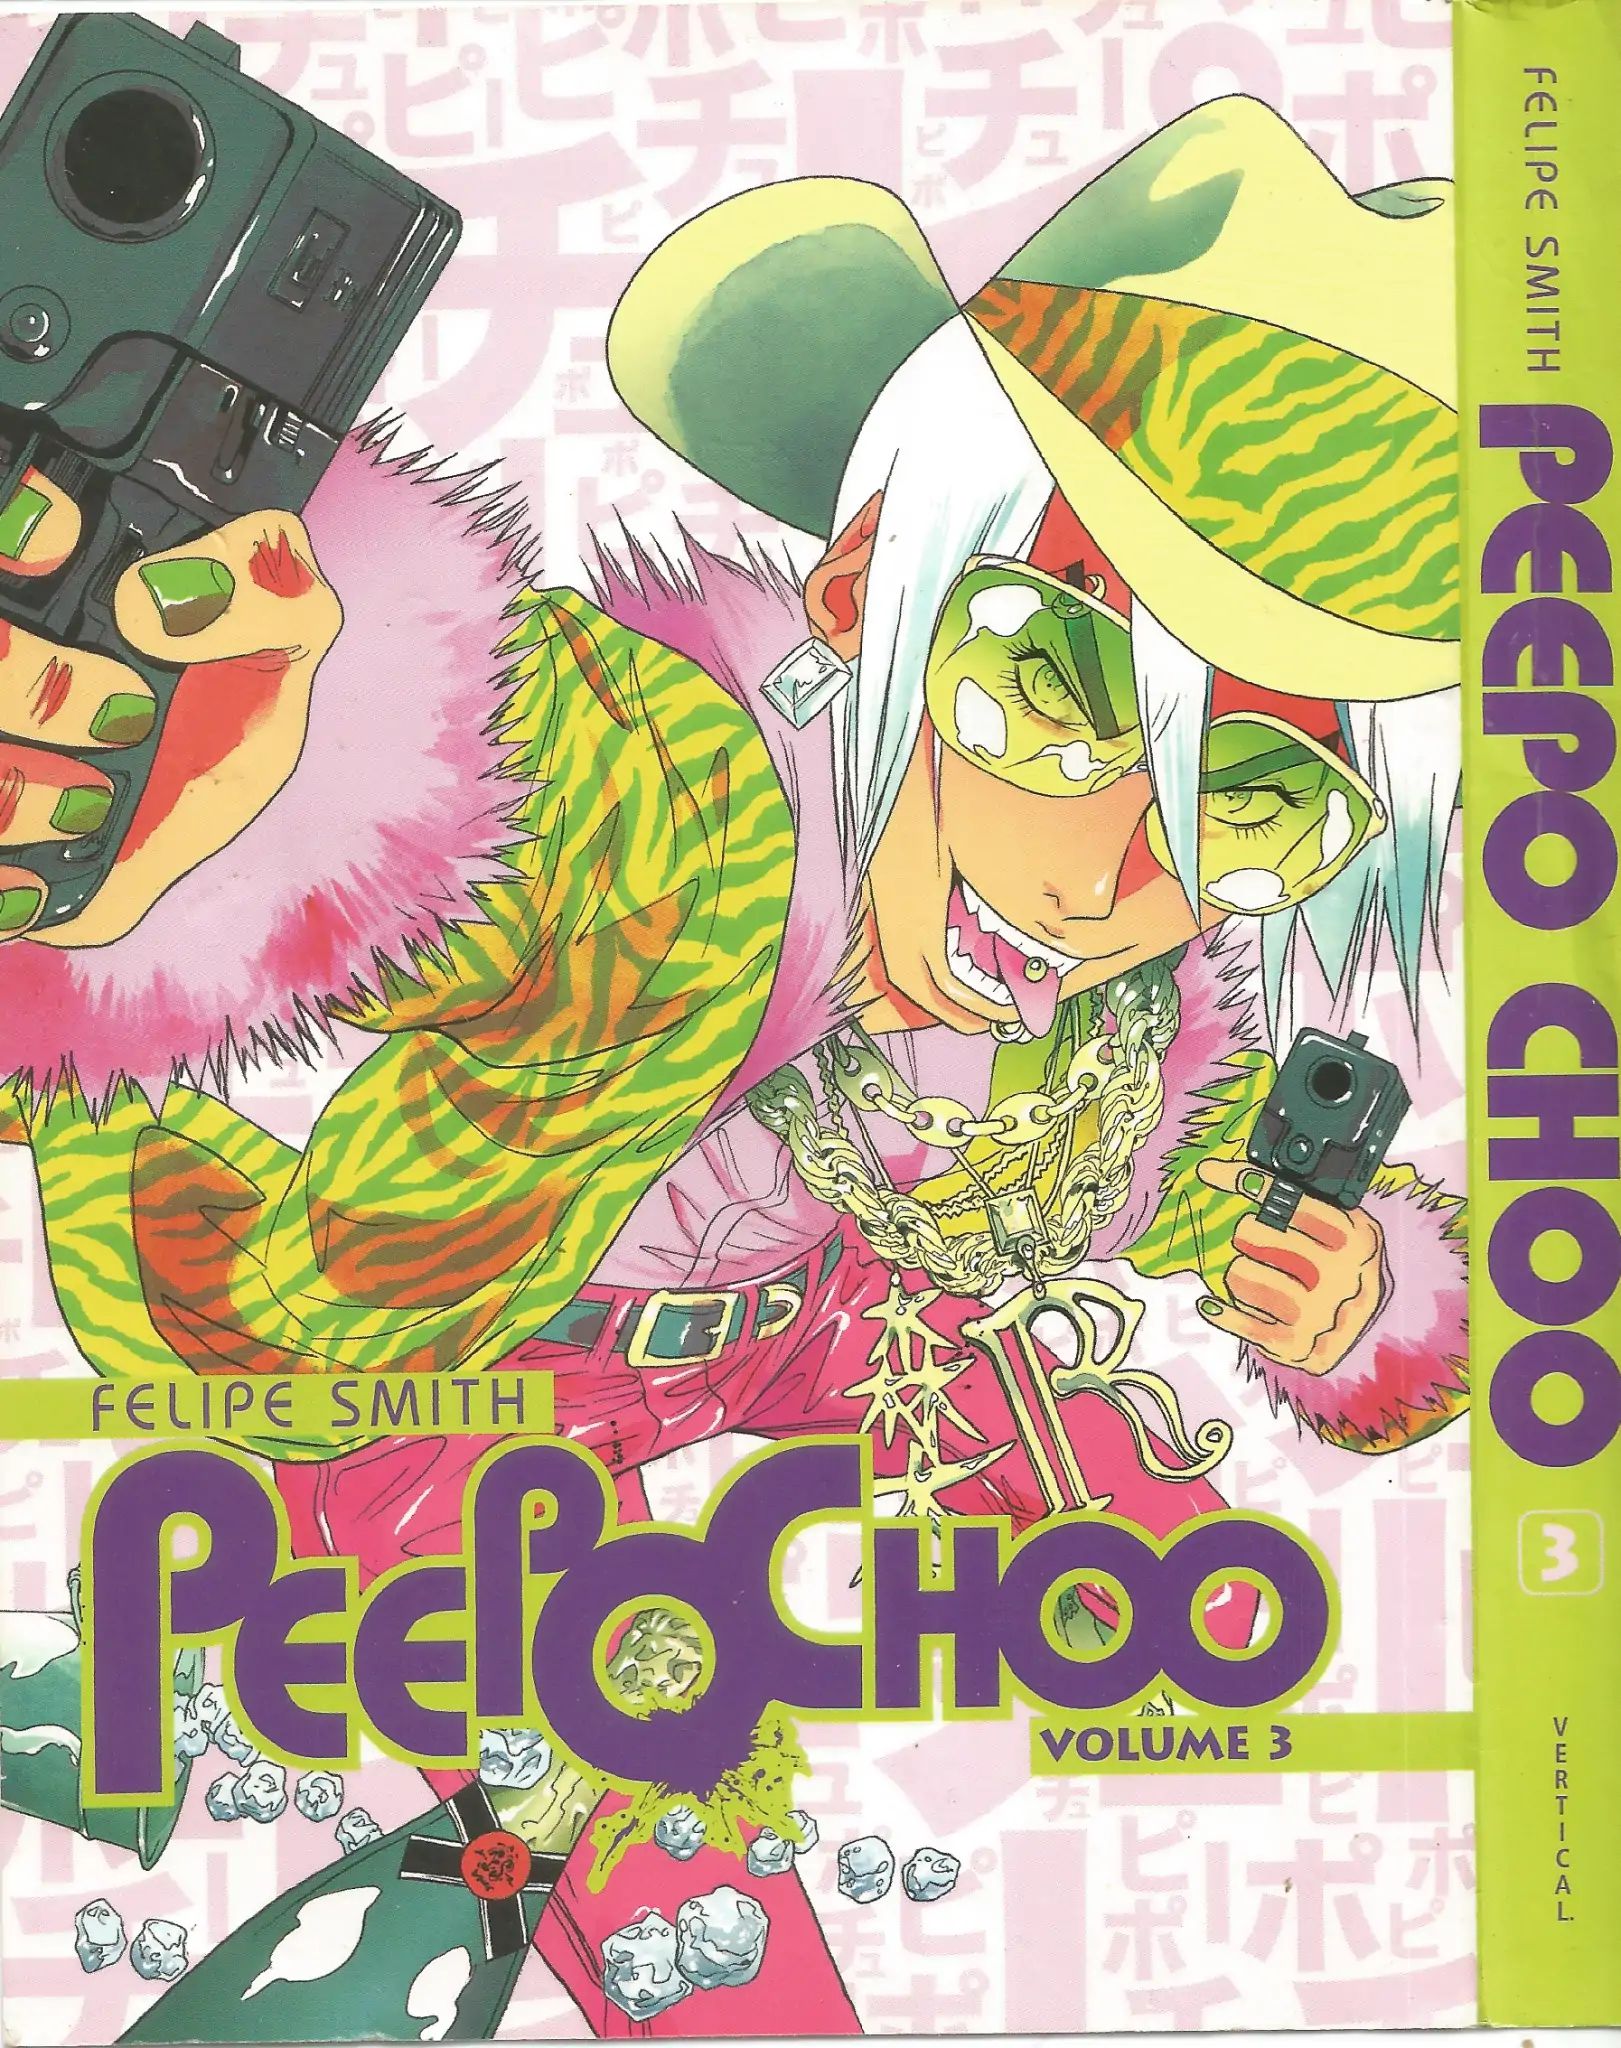 Peepo Choo - Page 1